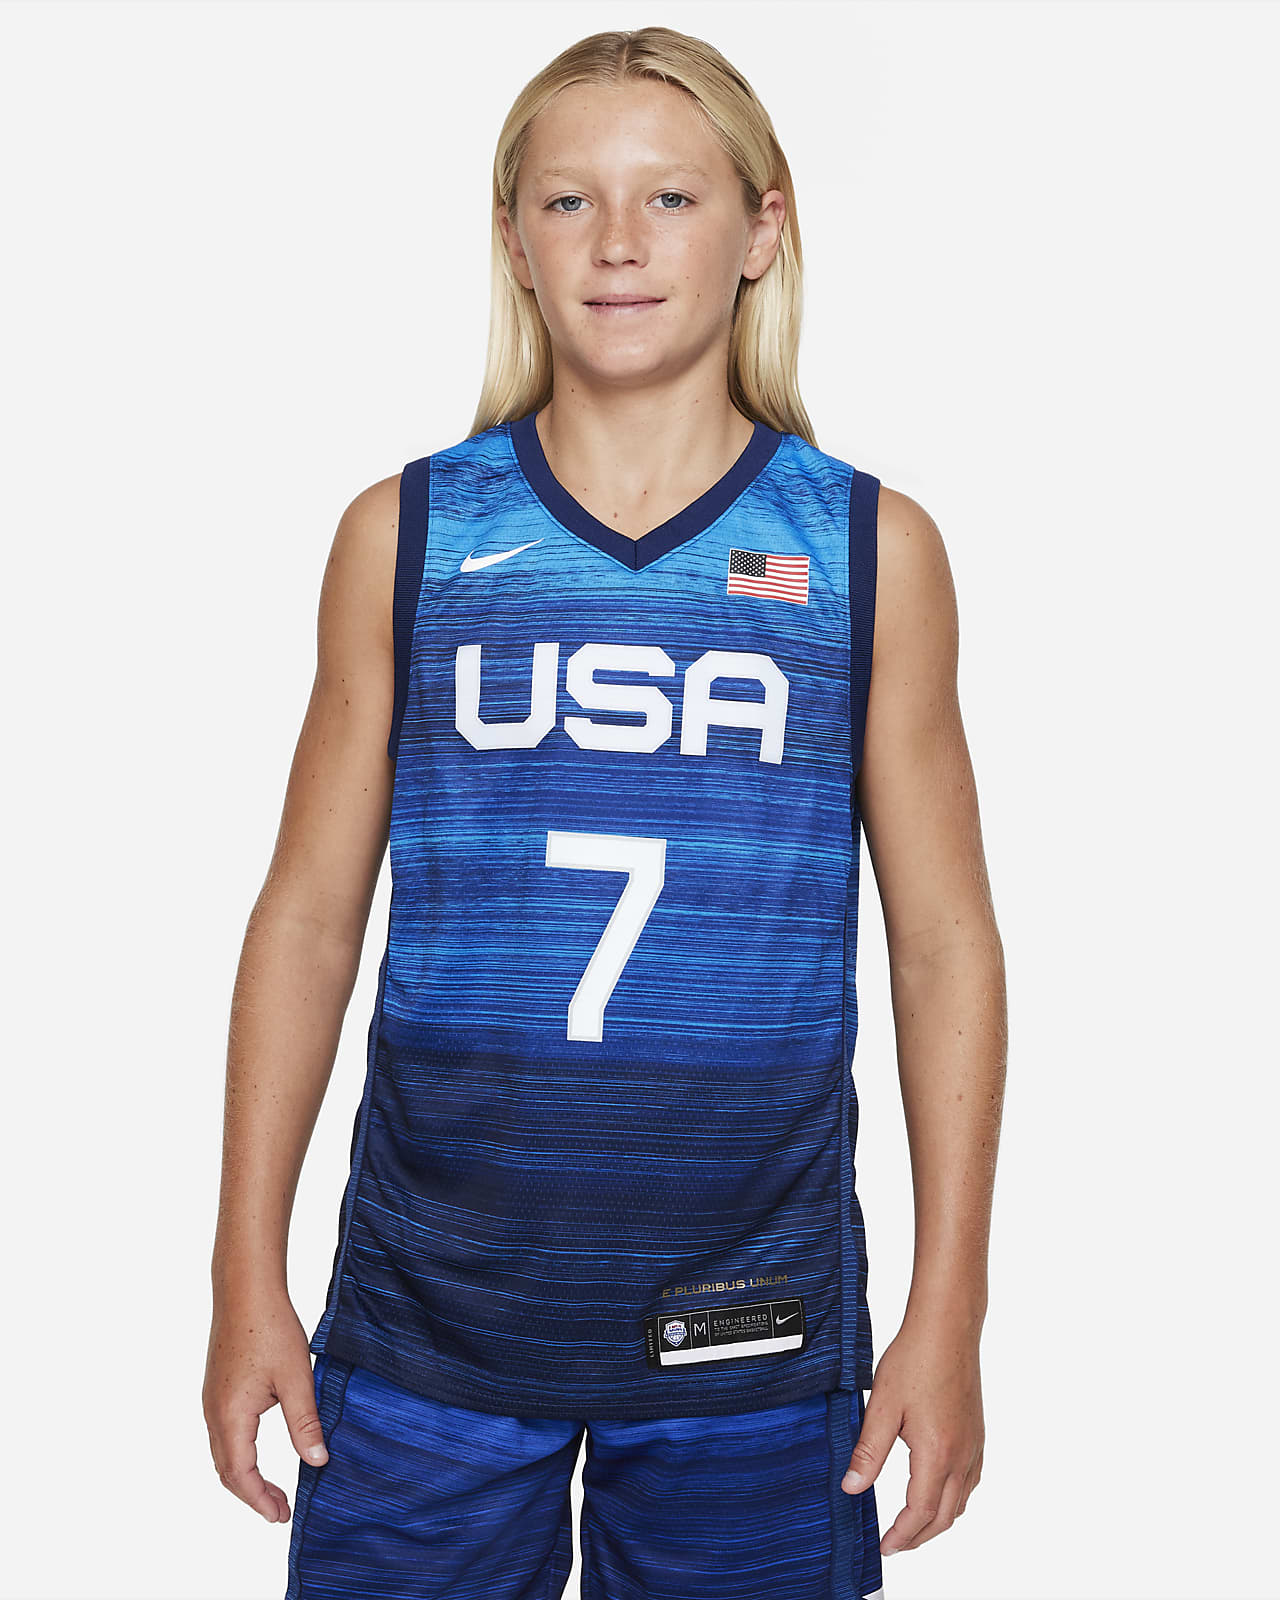 Nike Team USA (Kevin Durant) (Home) Nike Basketballtrikot für ältere Kinder